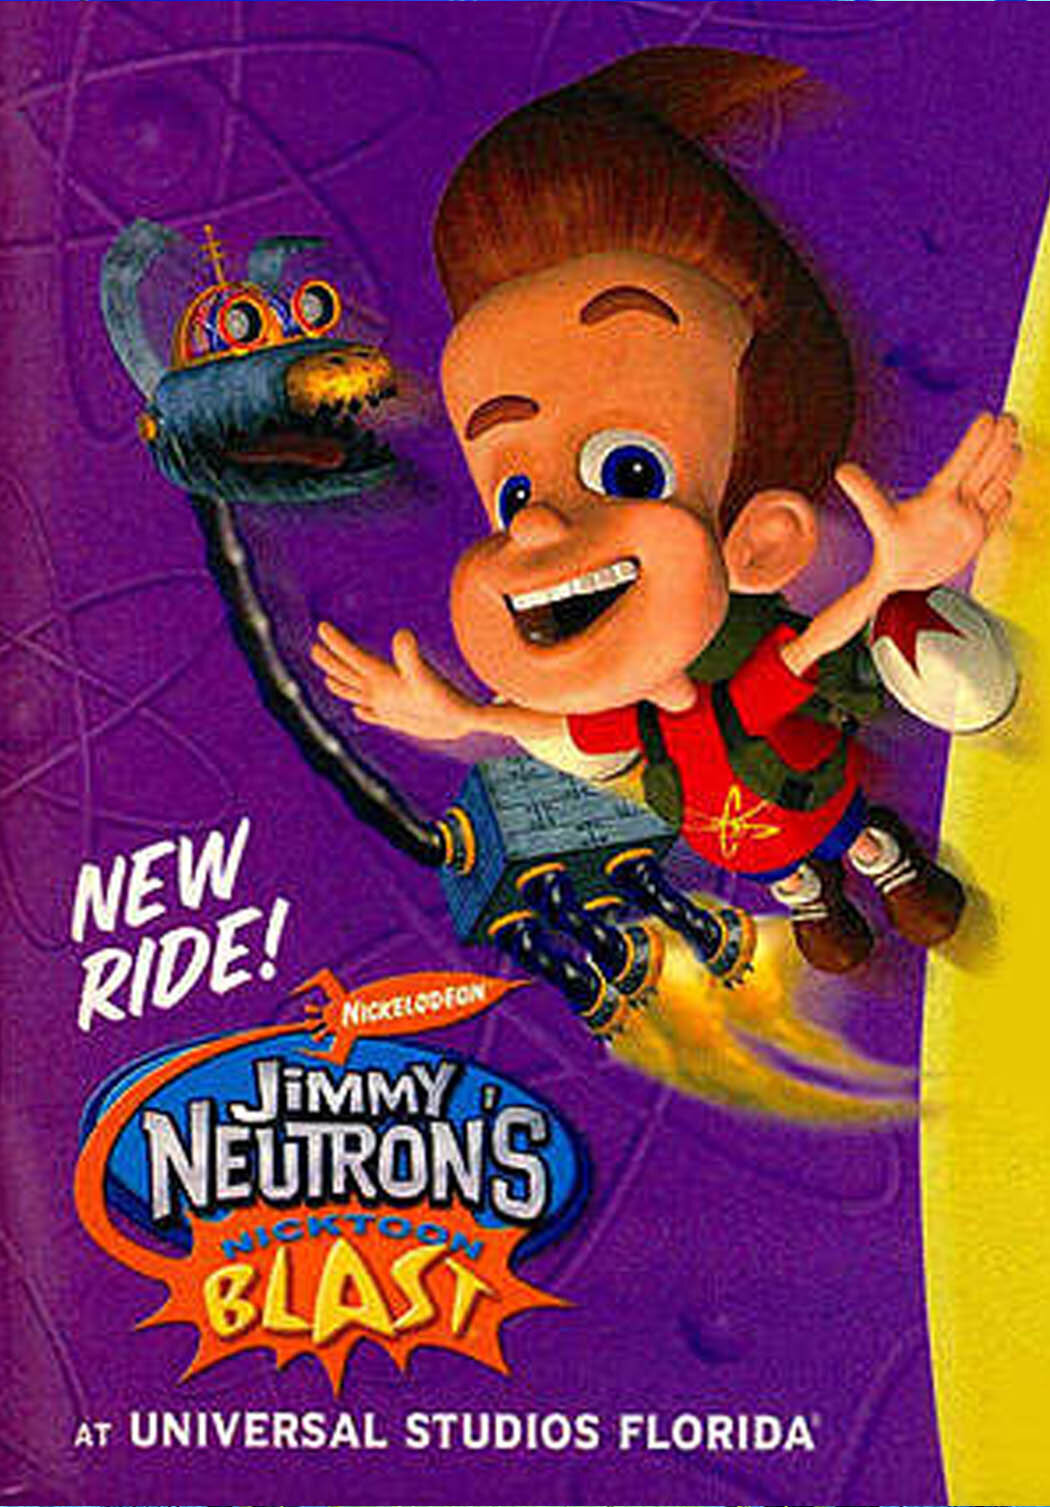 Jimmey Neutrons Nicktoons Blast.jpg